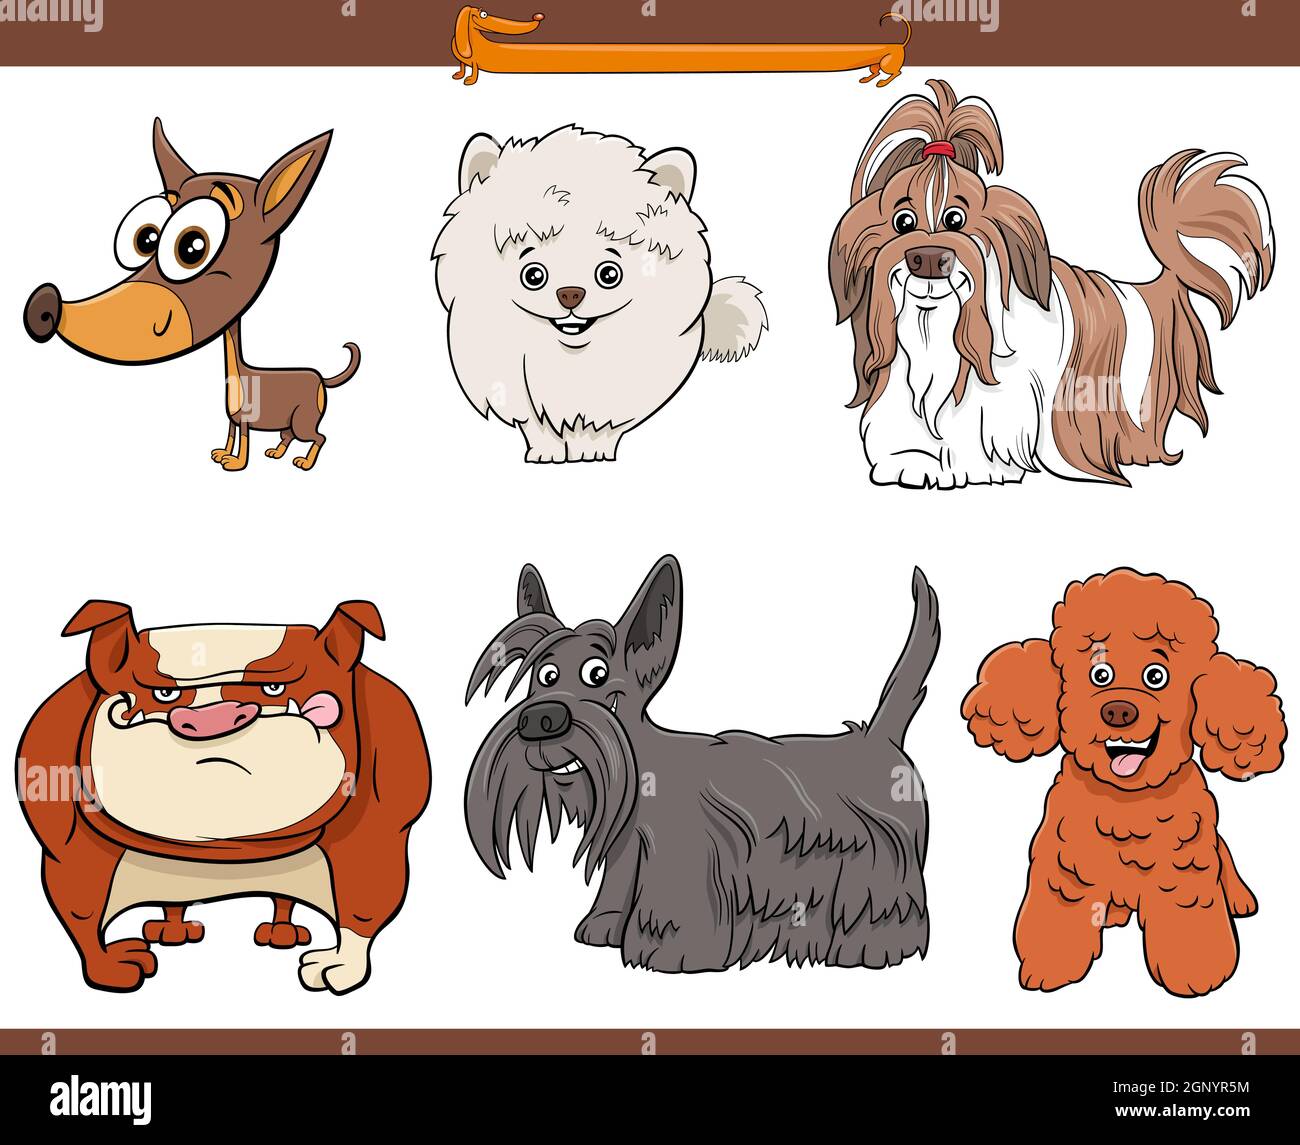 purebred cartoon dogs comic characters set Stock Vector